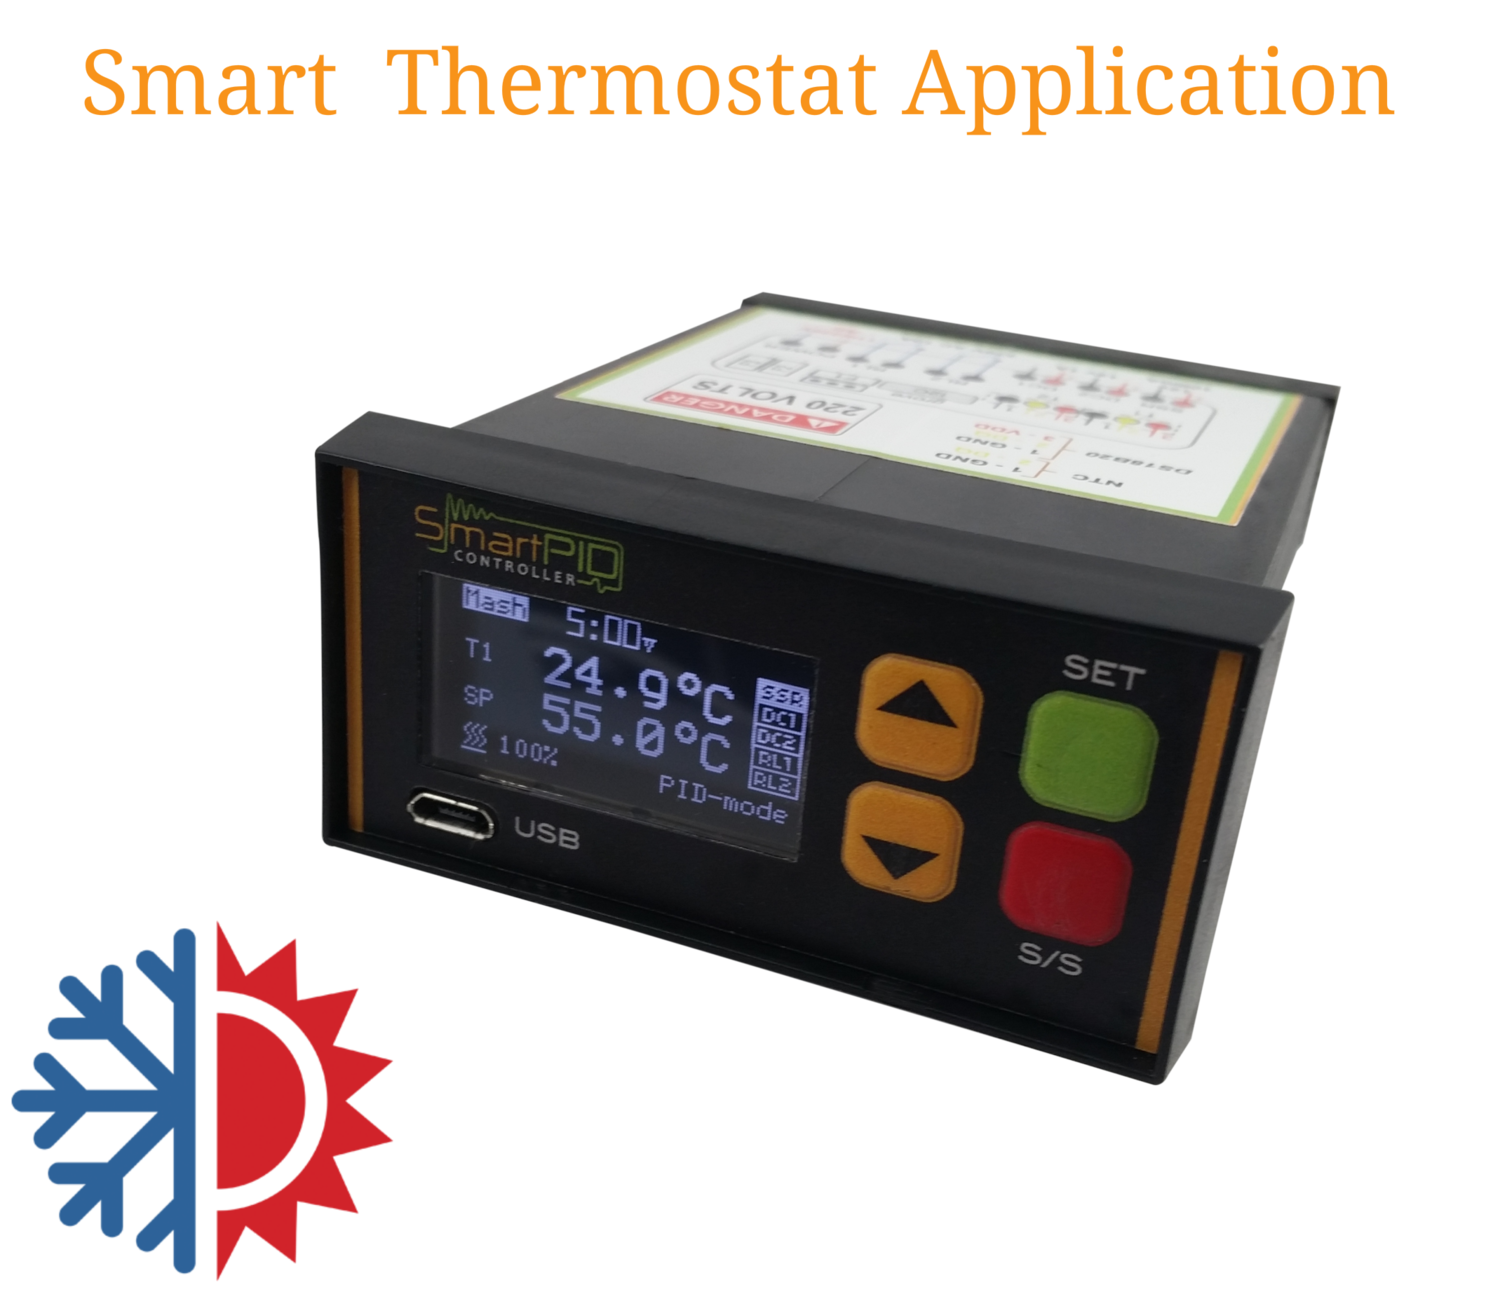 SmartPID - Smart Thermostat application